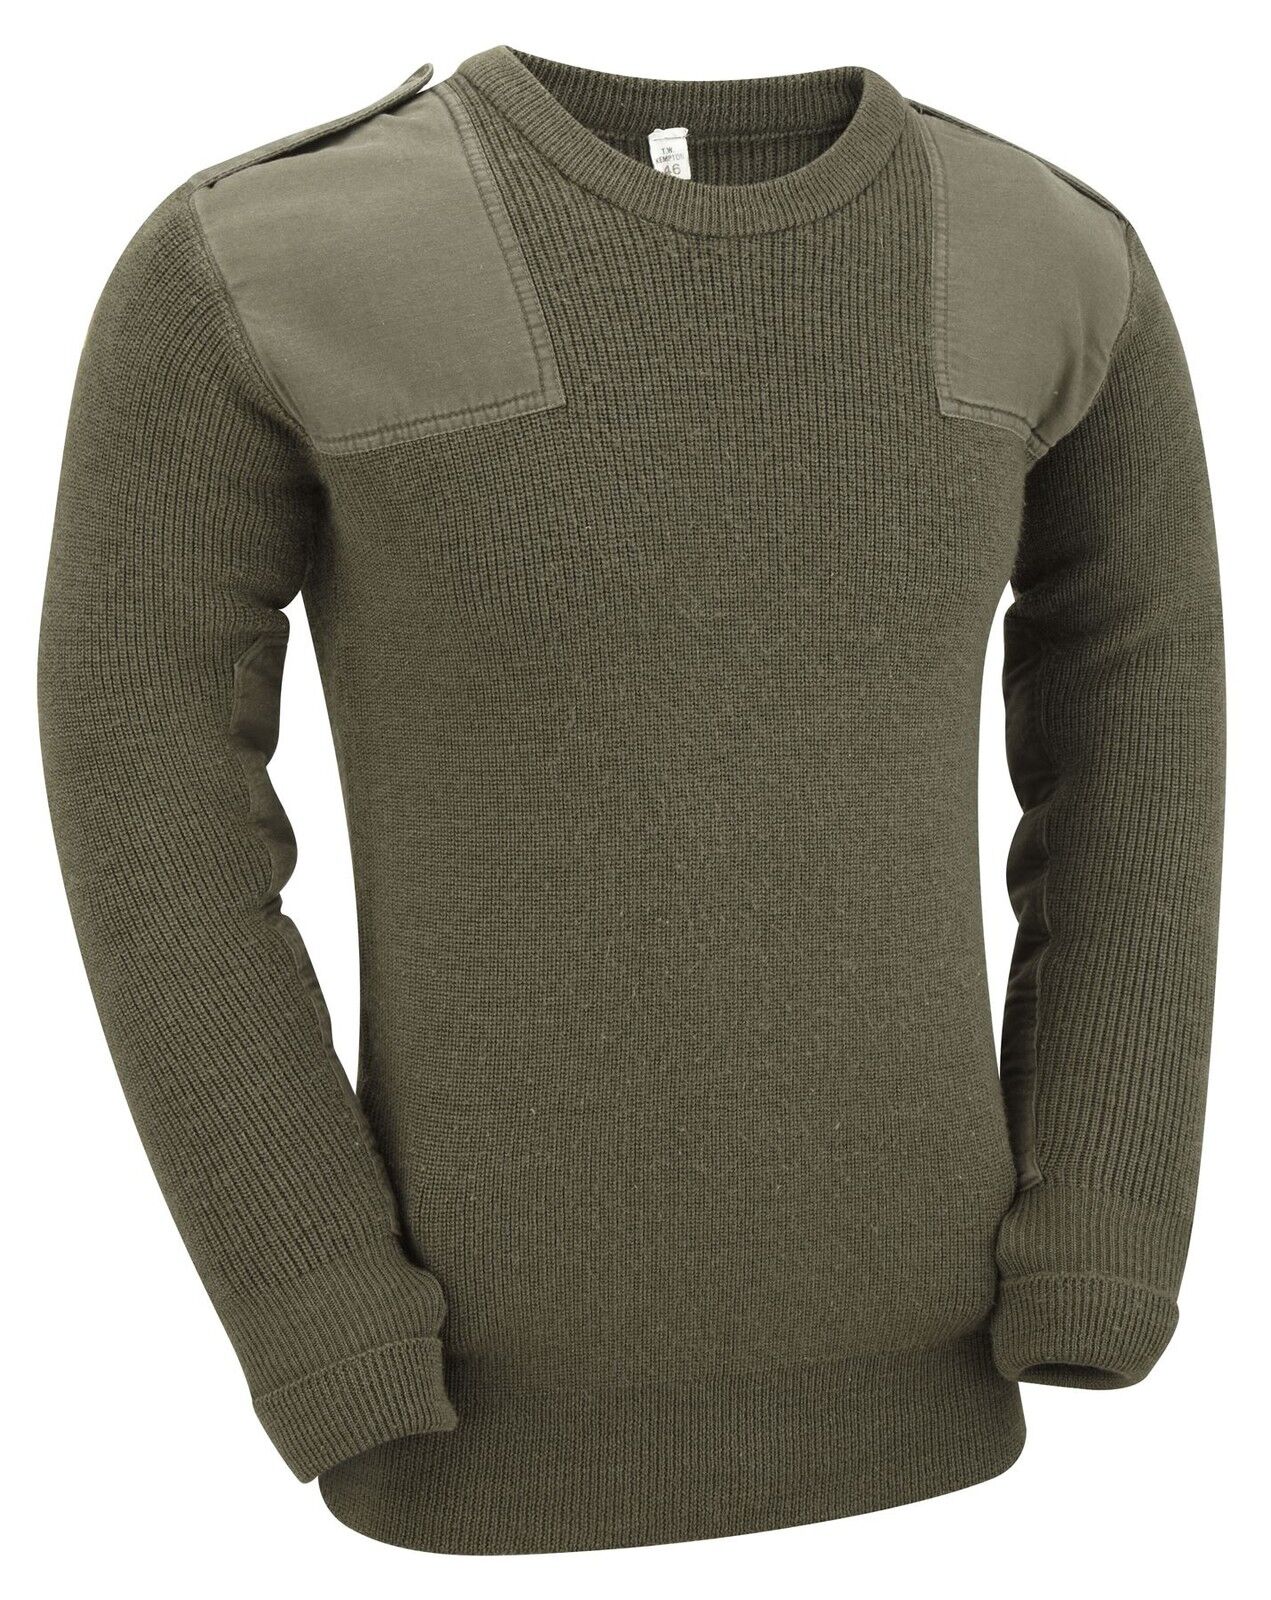 Army Jumper Original German Warm Wool Sweater Military Work Pullover Olive Green